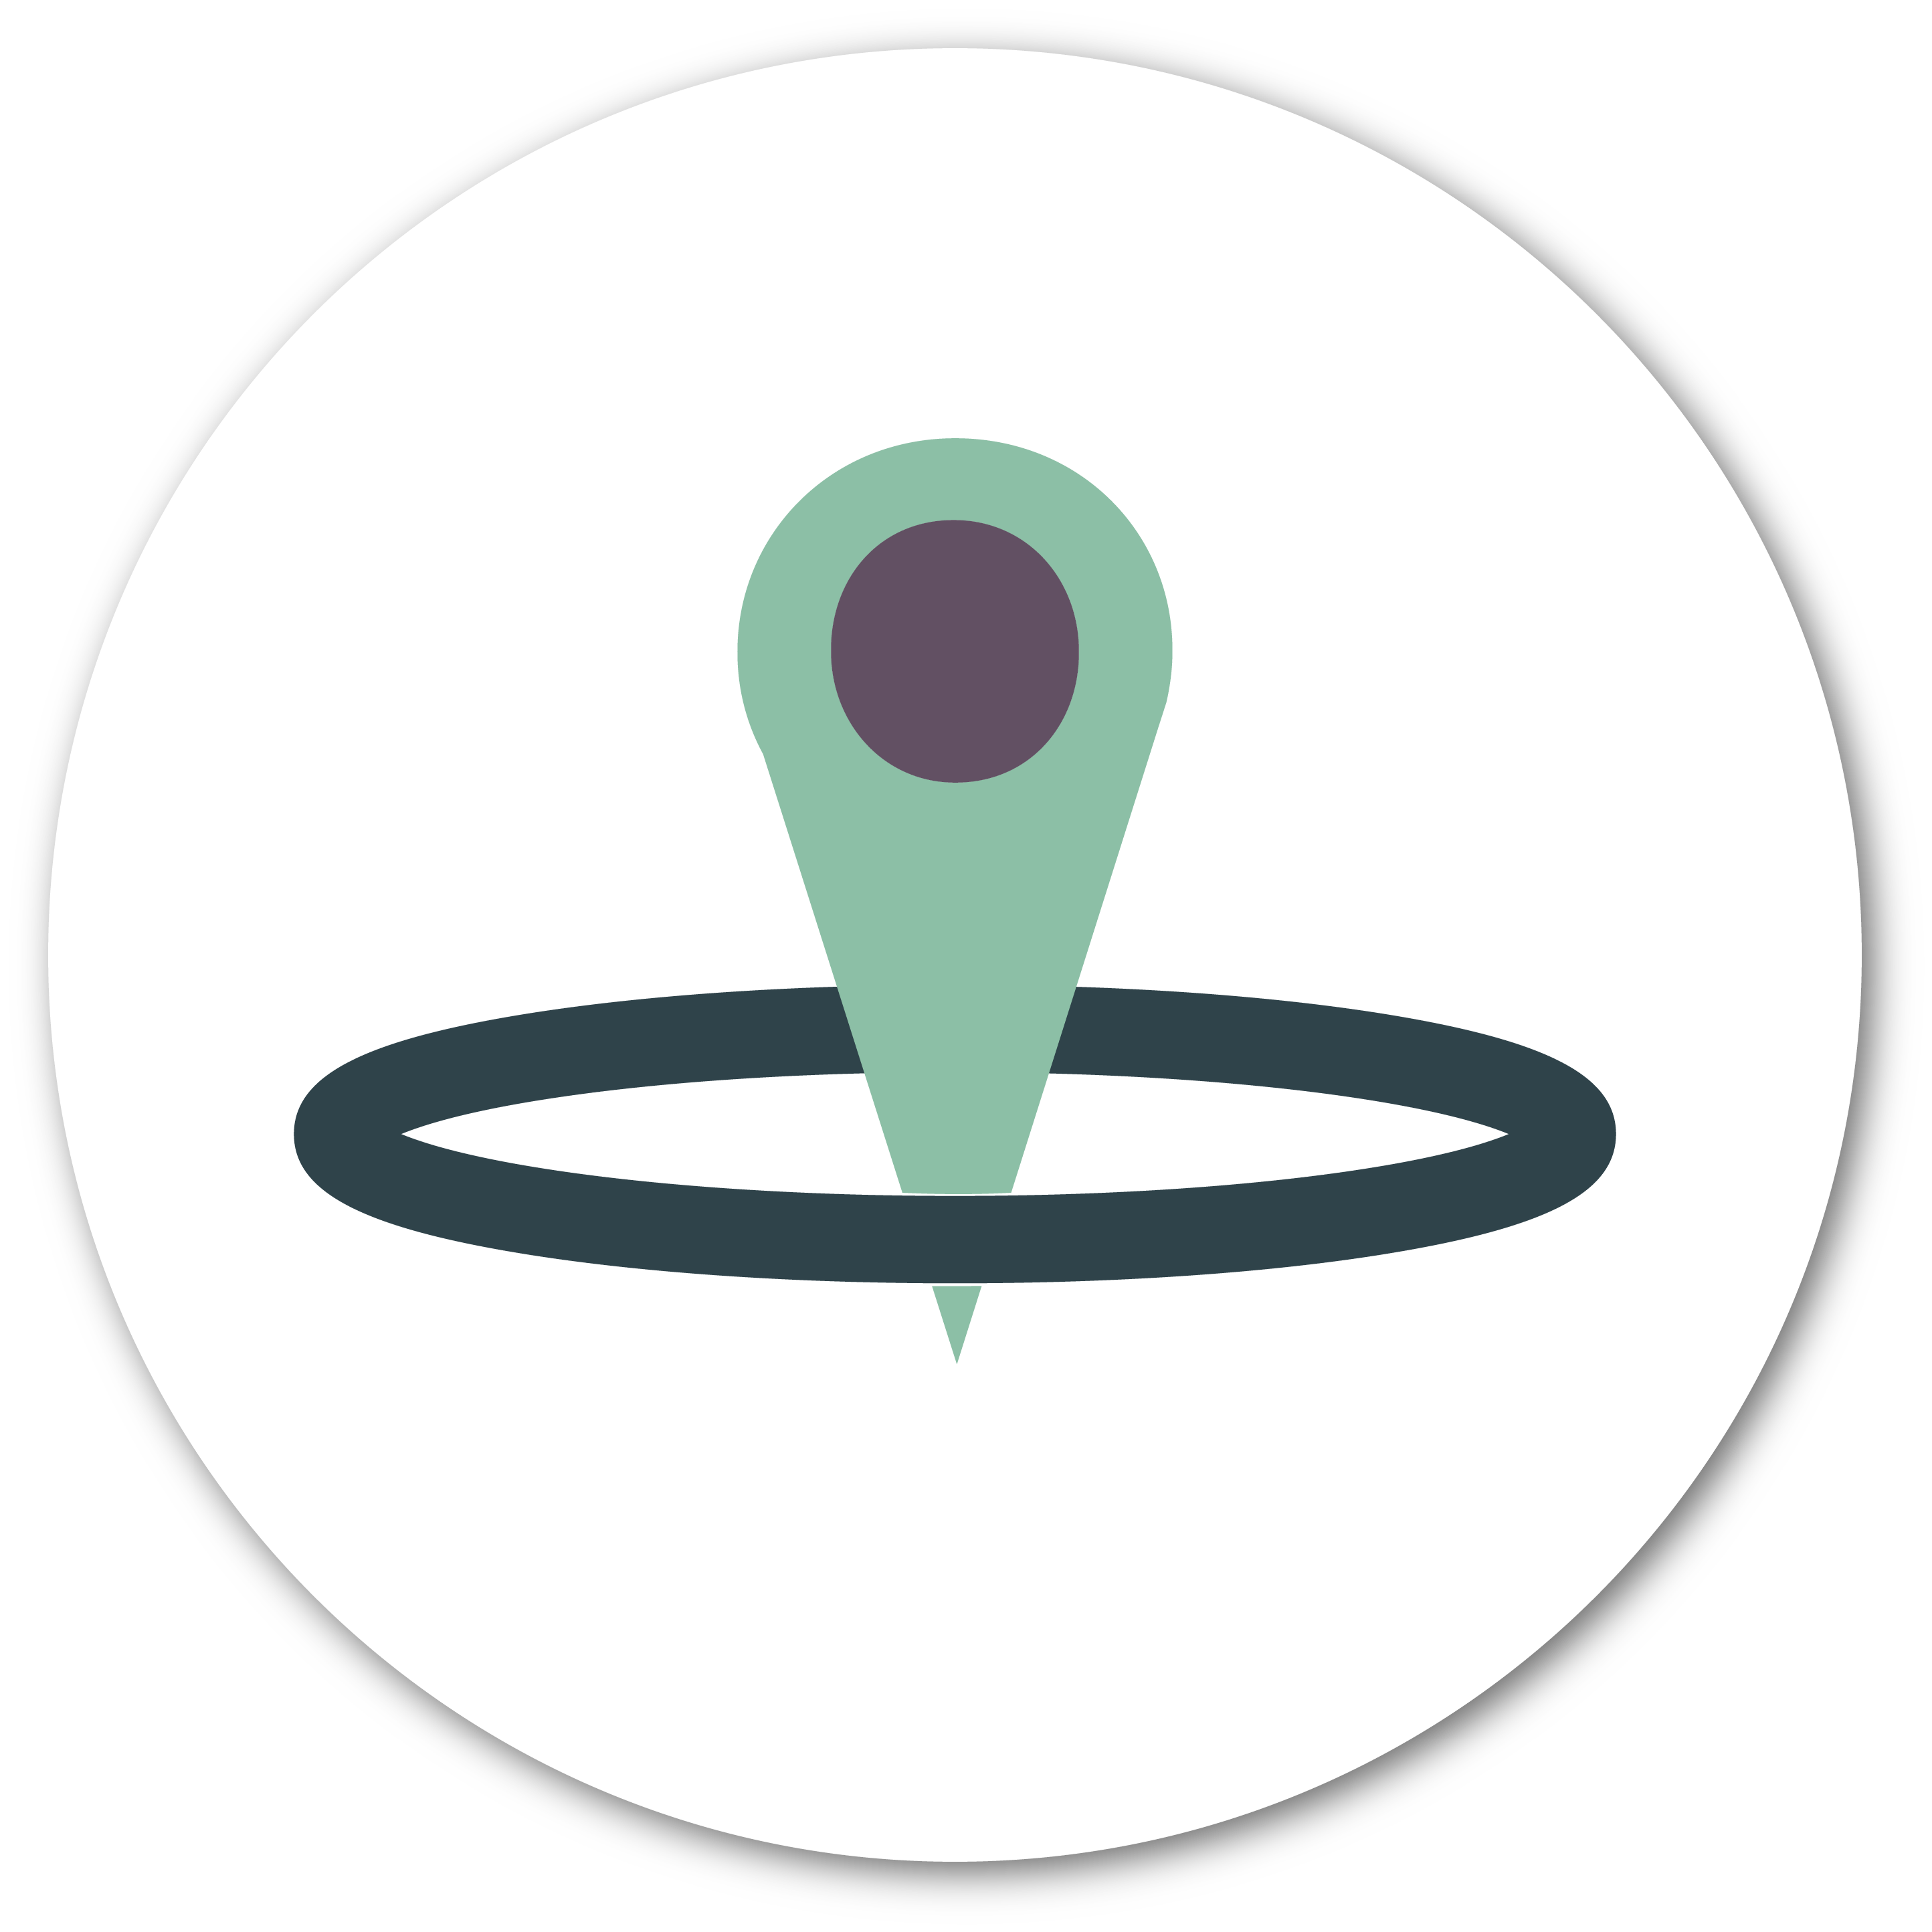 sales territory design icon